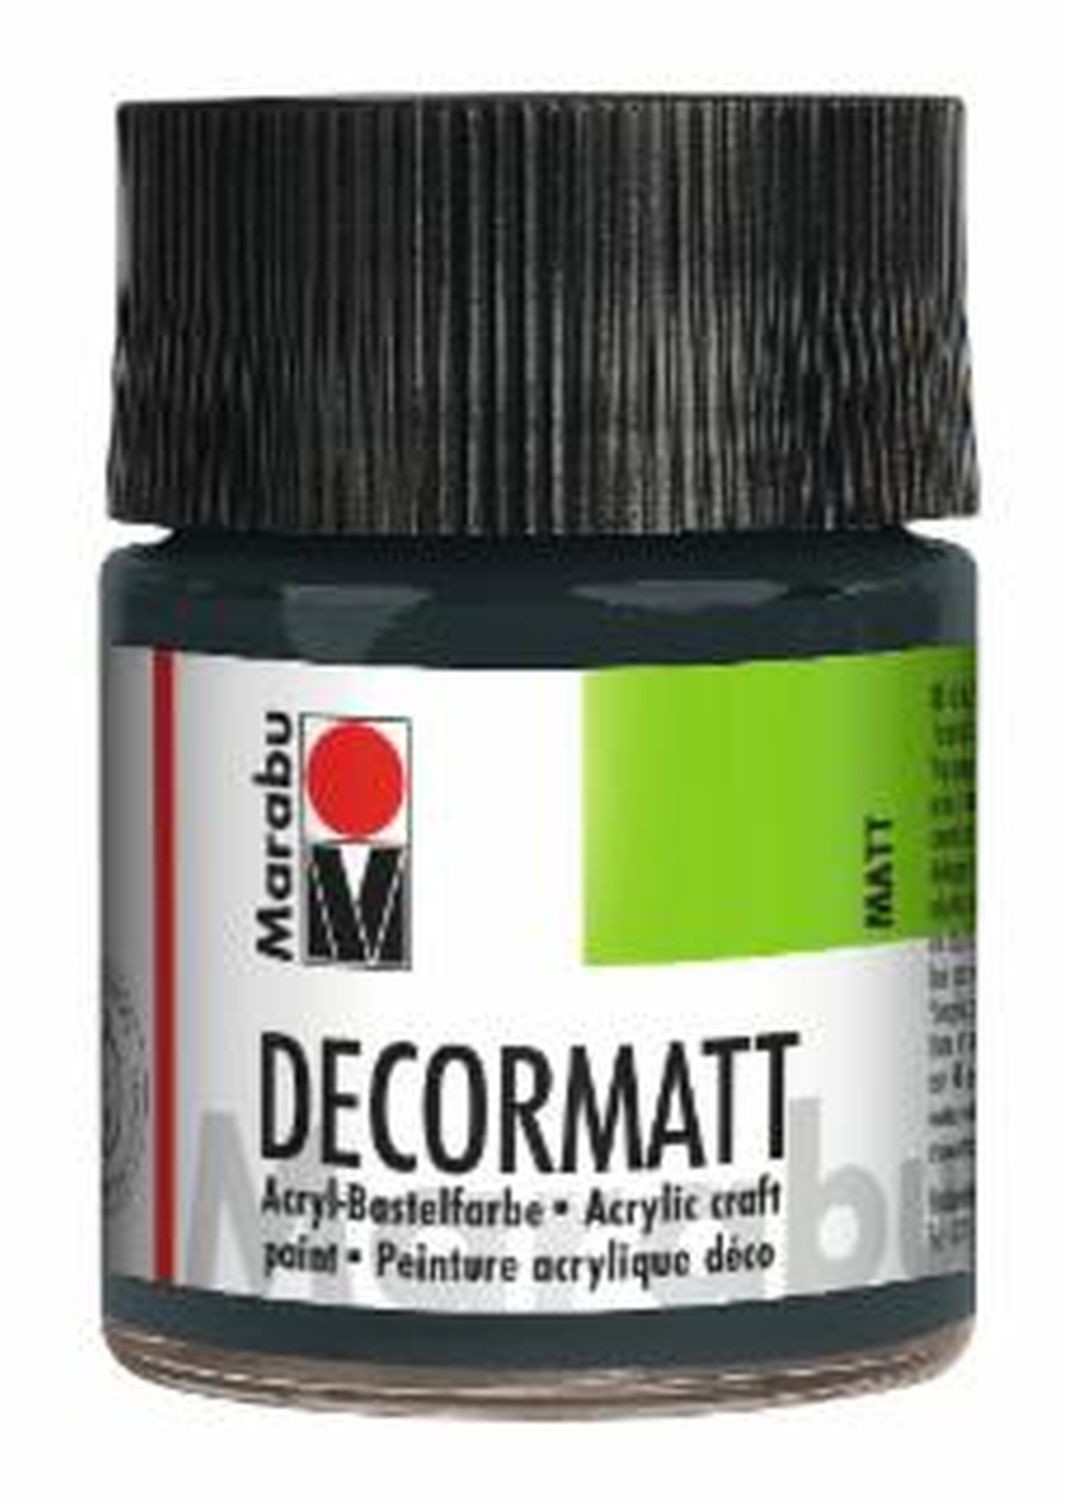 Decormatt Acryl - Dunkelgrau 079, 50 ml